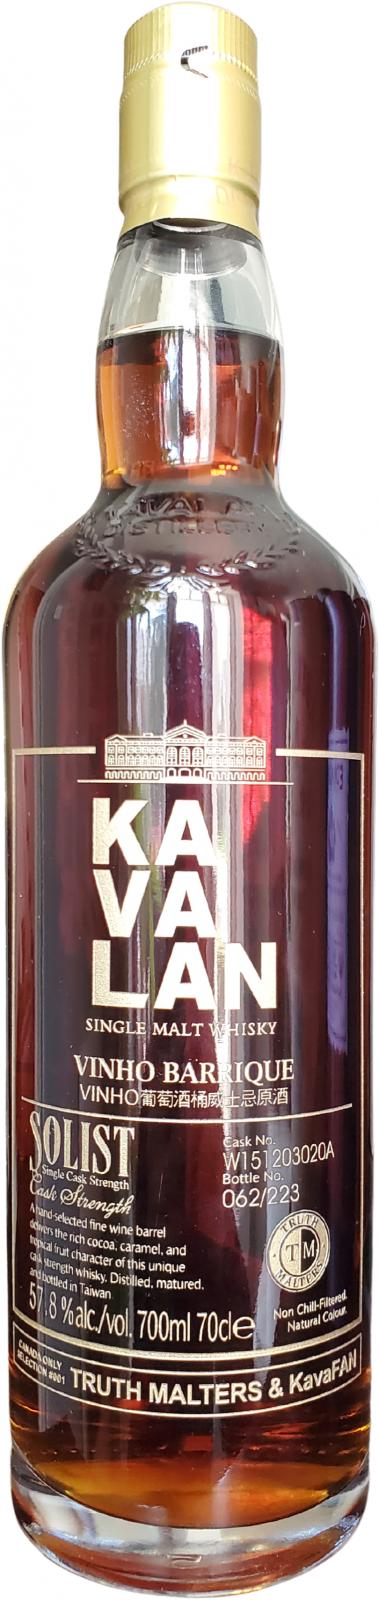 Kavalan Solist wine Barrique W151203020A Truth Malters & KavaFAN 57.8% 700ml